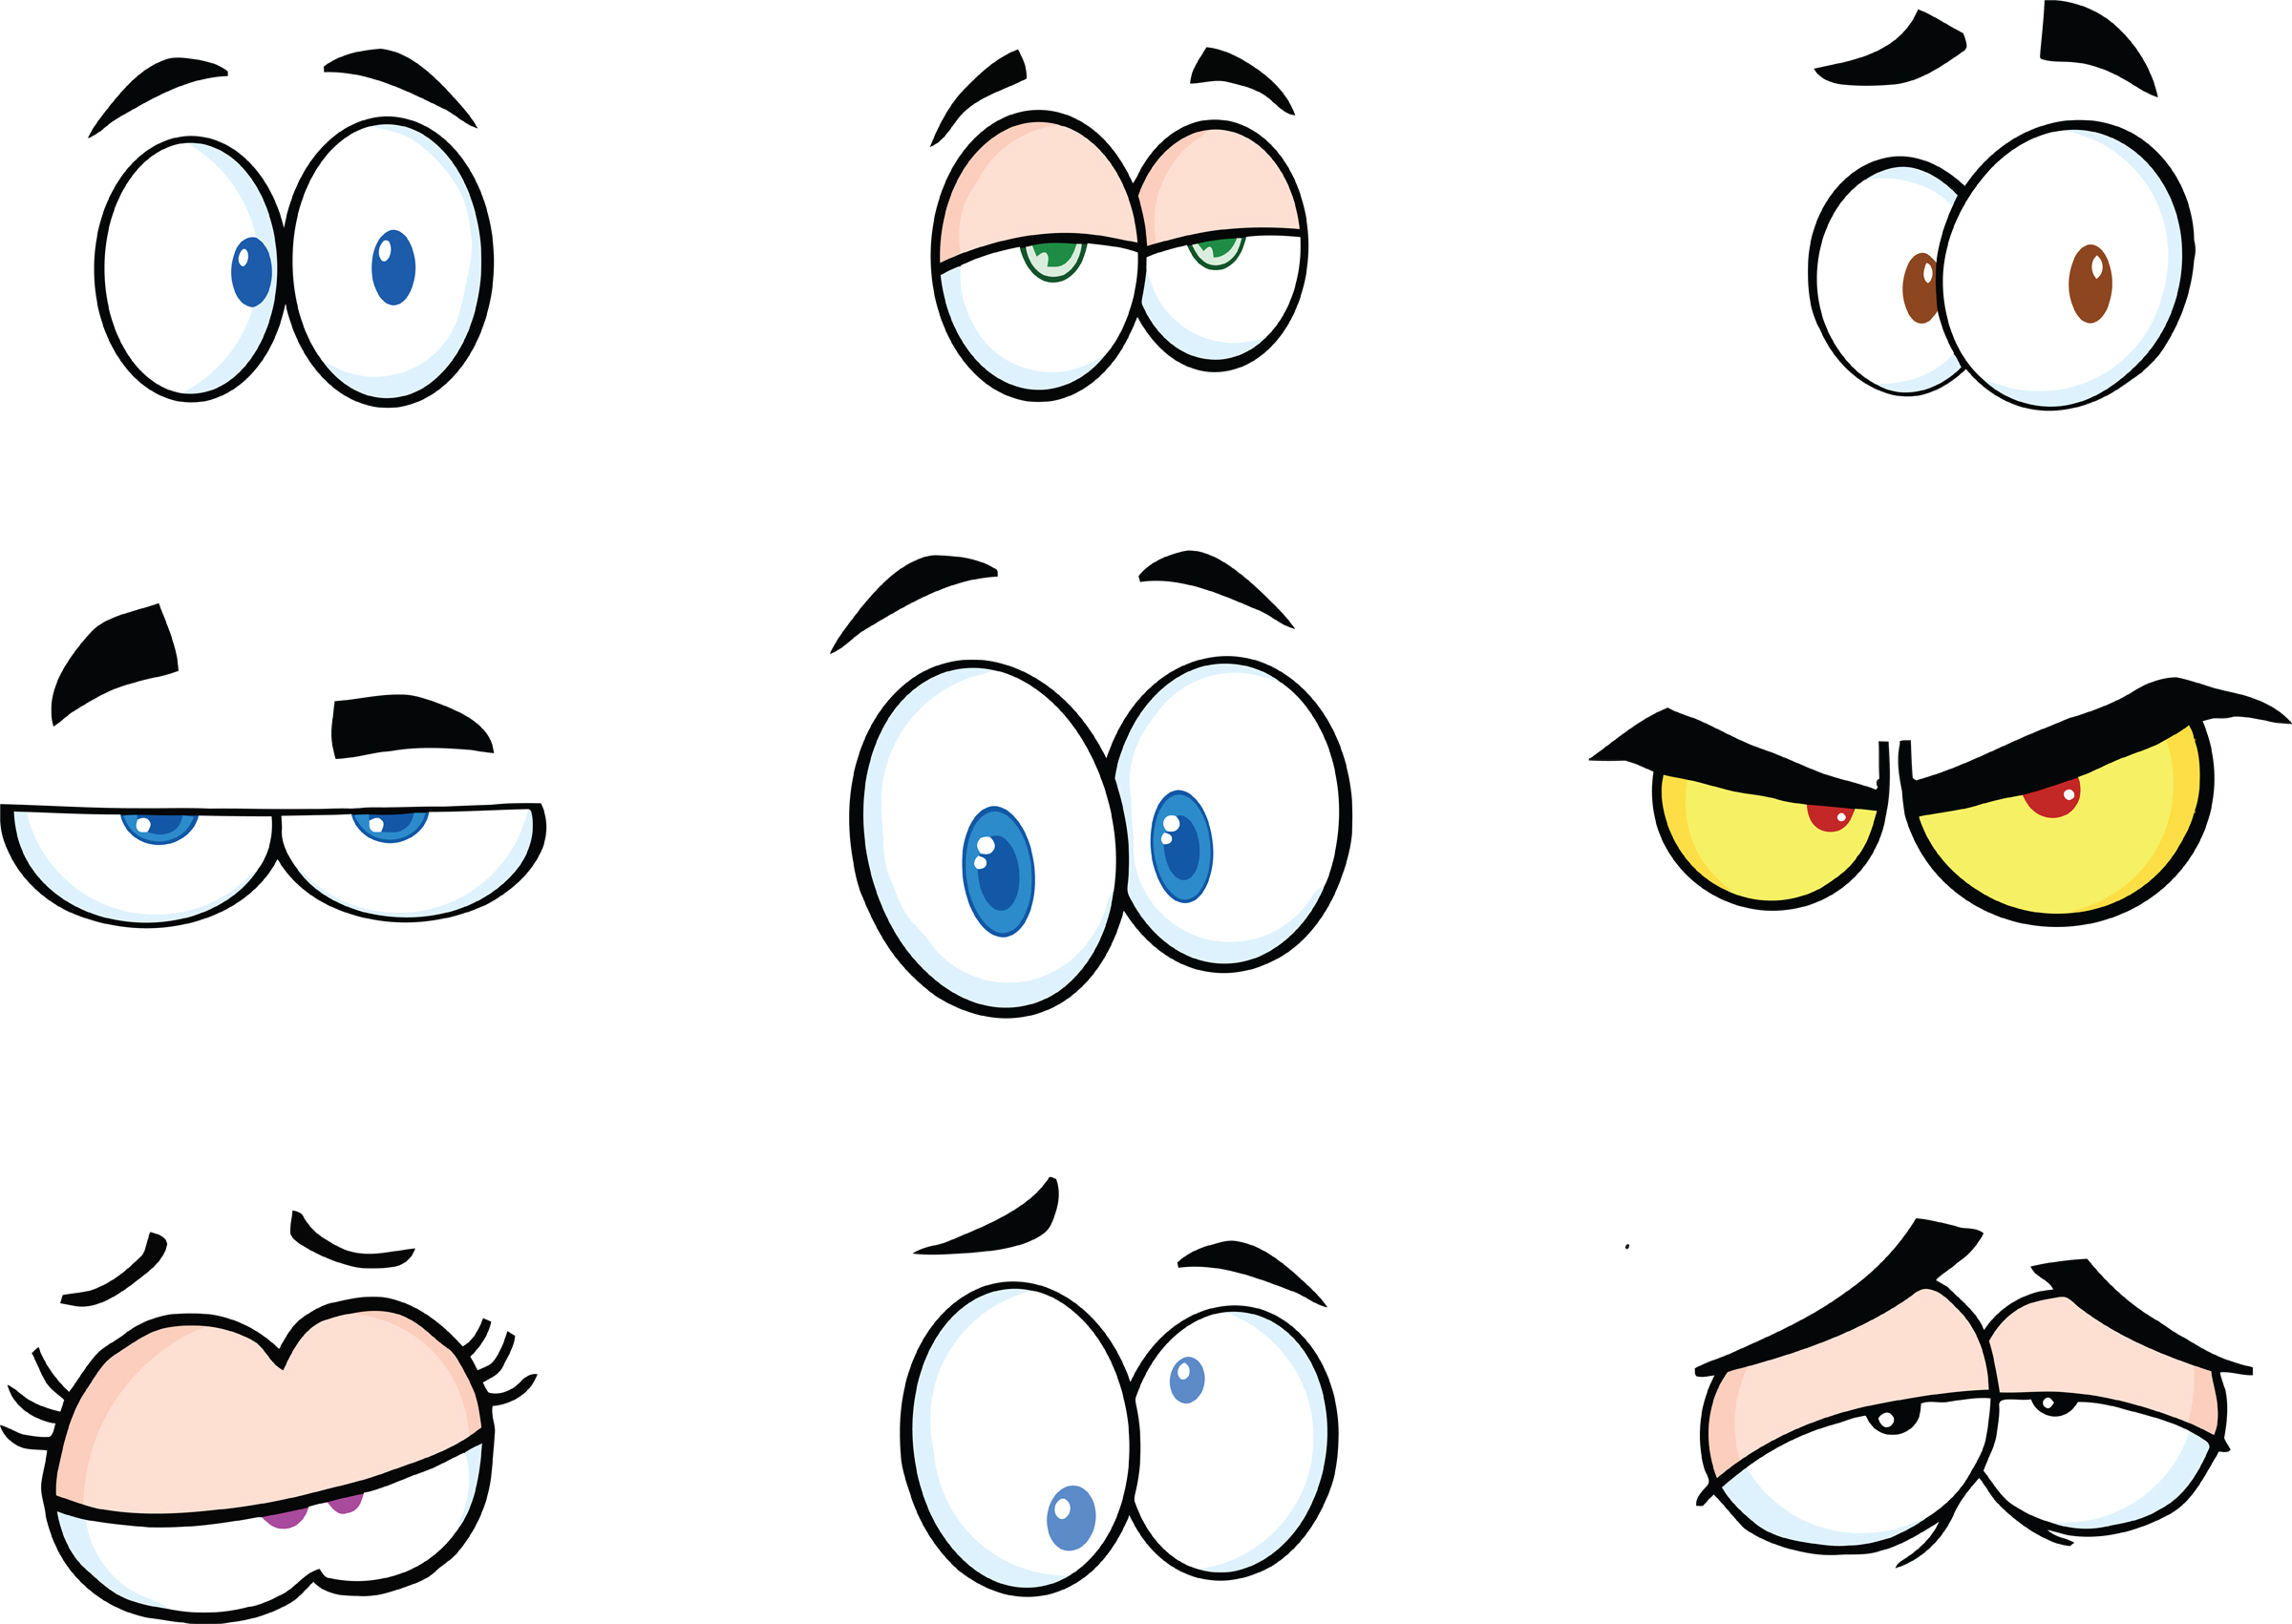 How To Draw Eyes Cartoon - Fannie Top